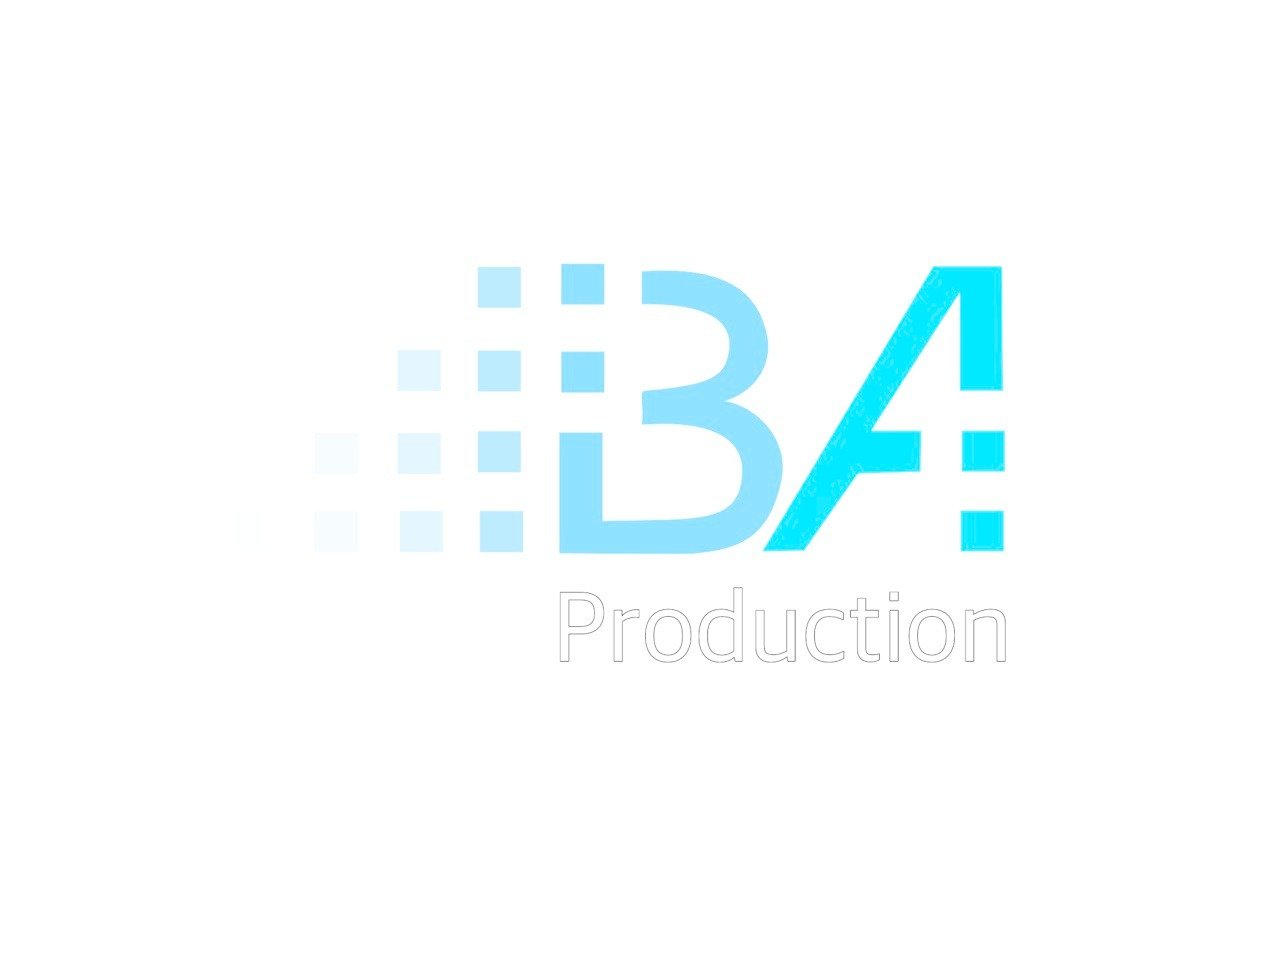 BA Production